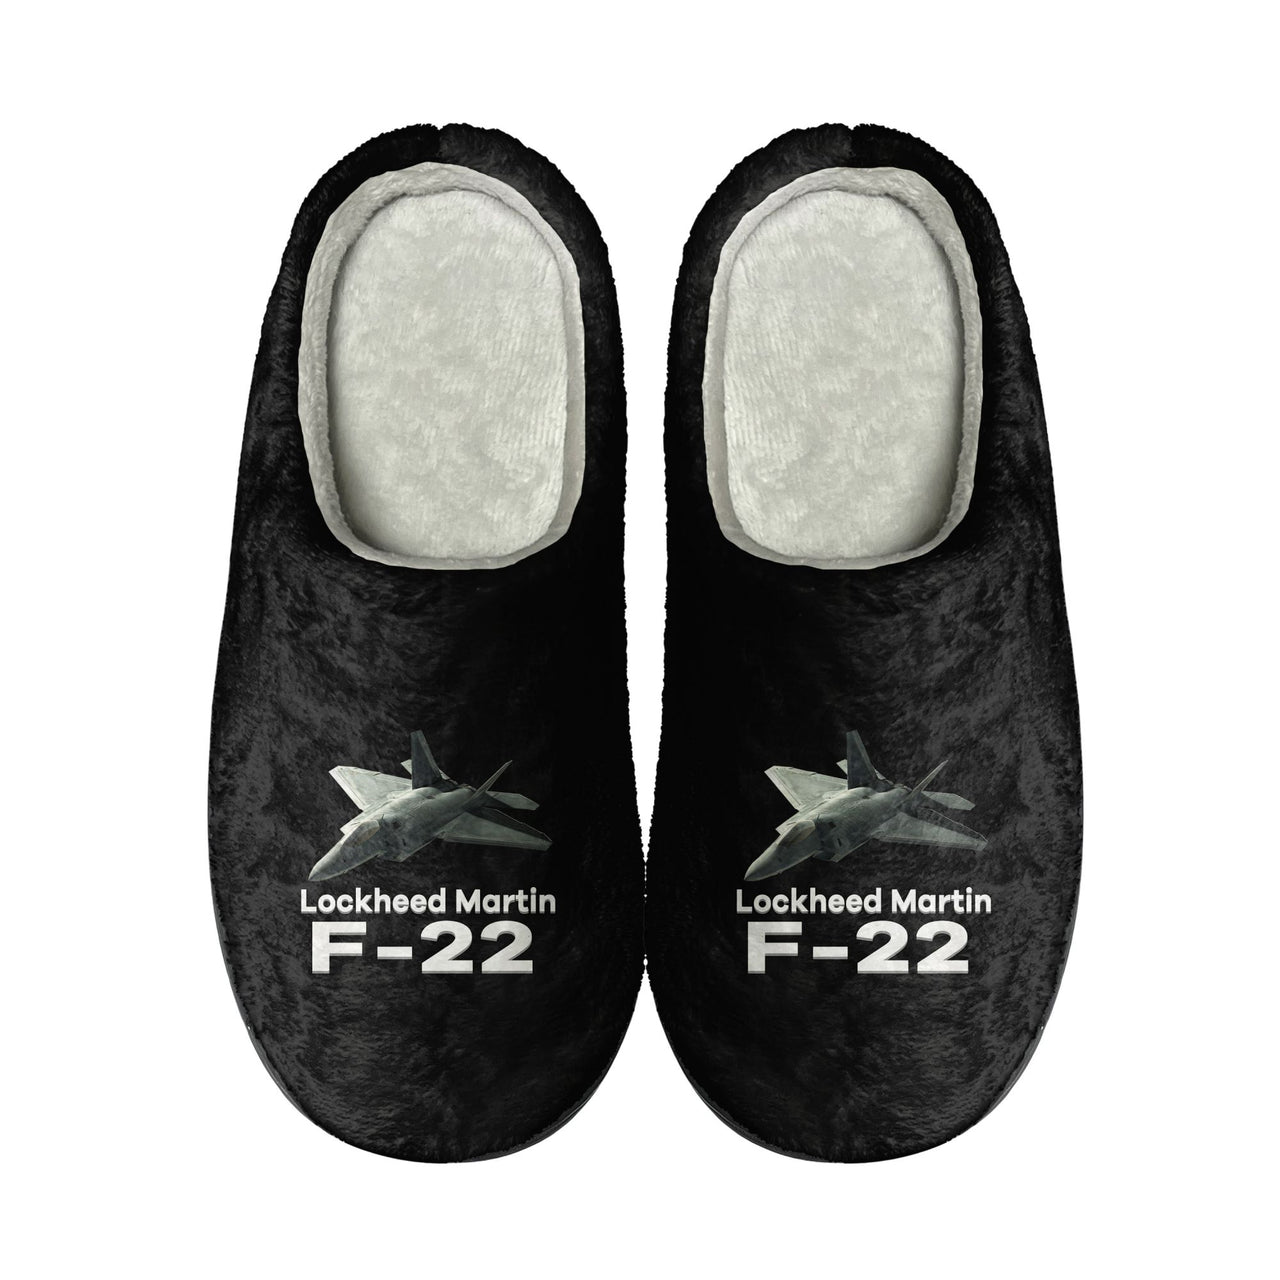 The Lockheed Martin F22 Designed Cotton Slippers